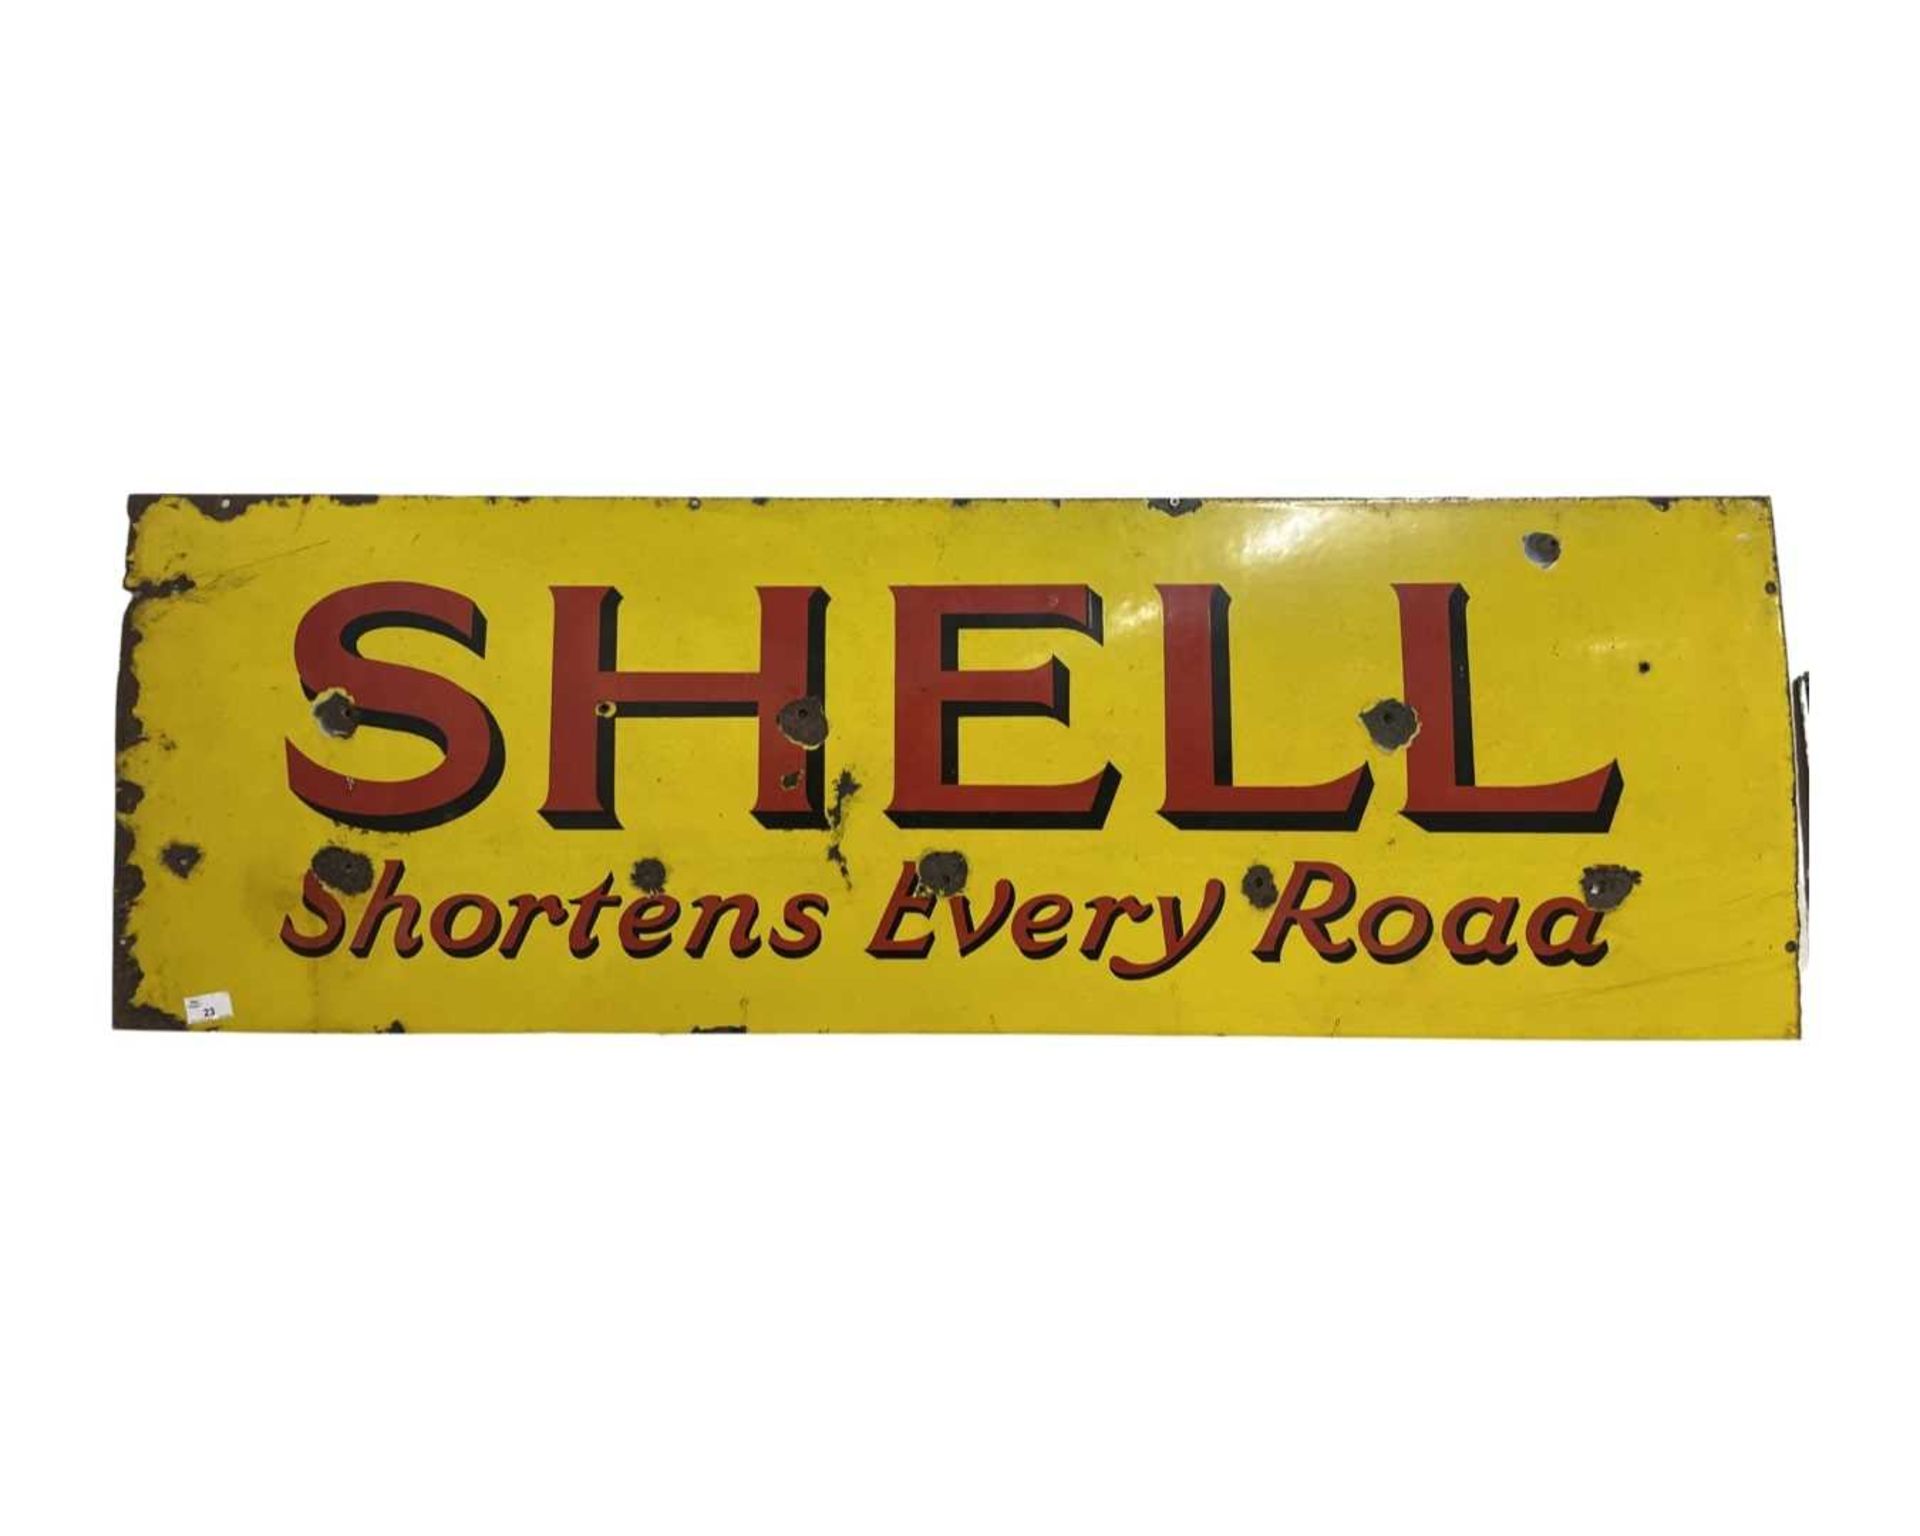 Shell enamel advertising sign approximately 136 x 45cm